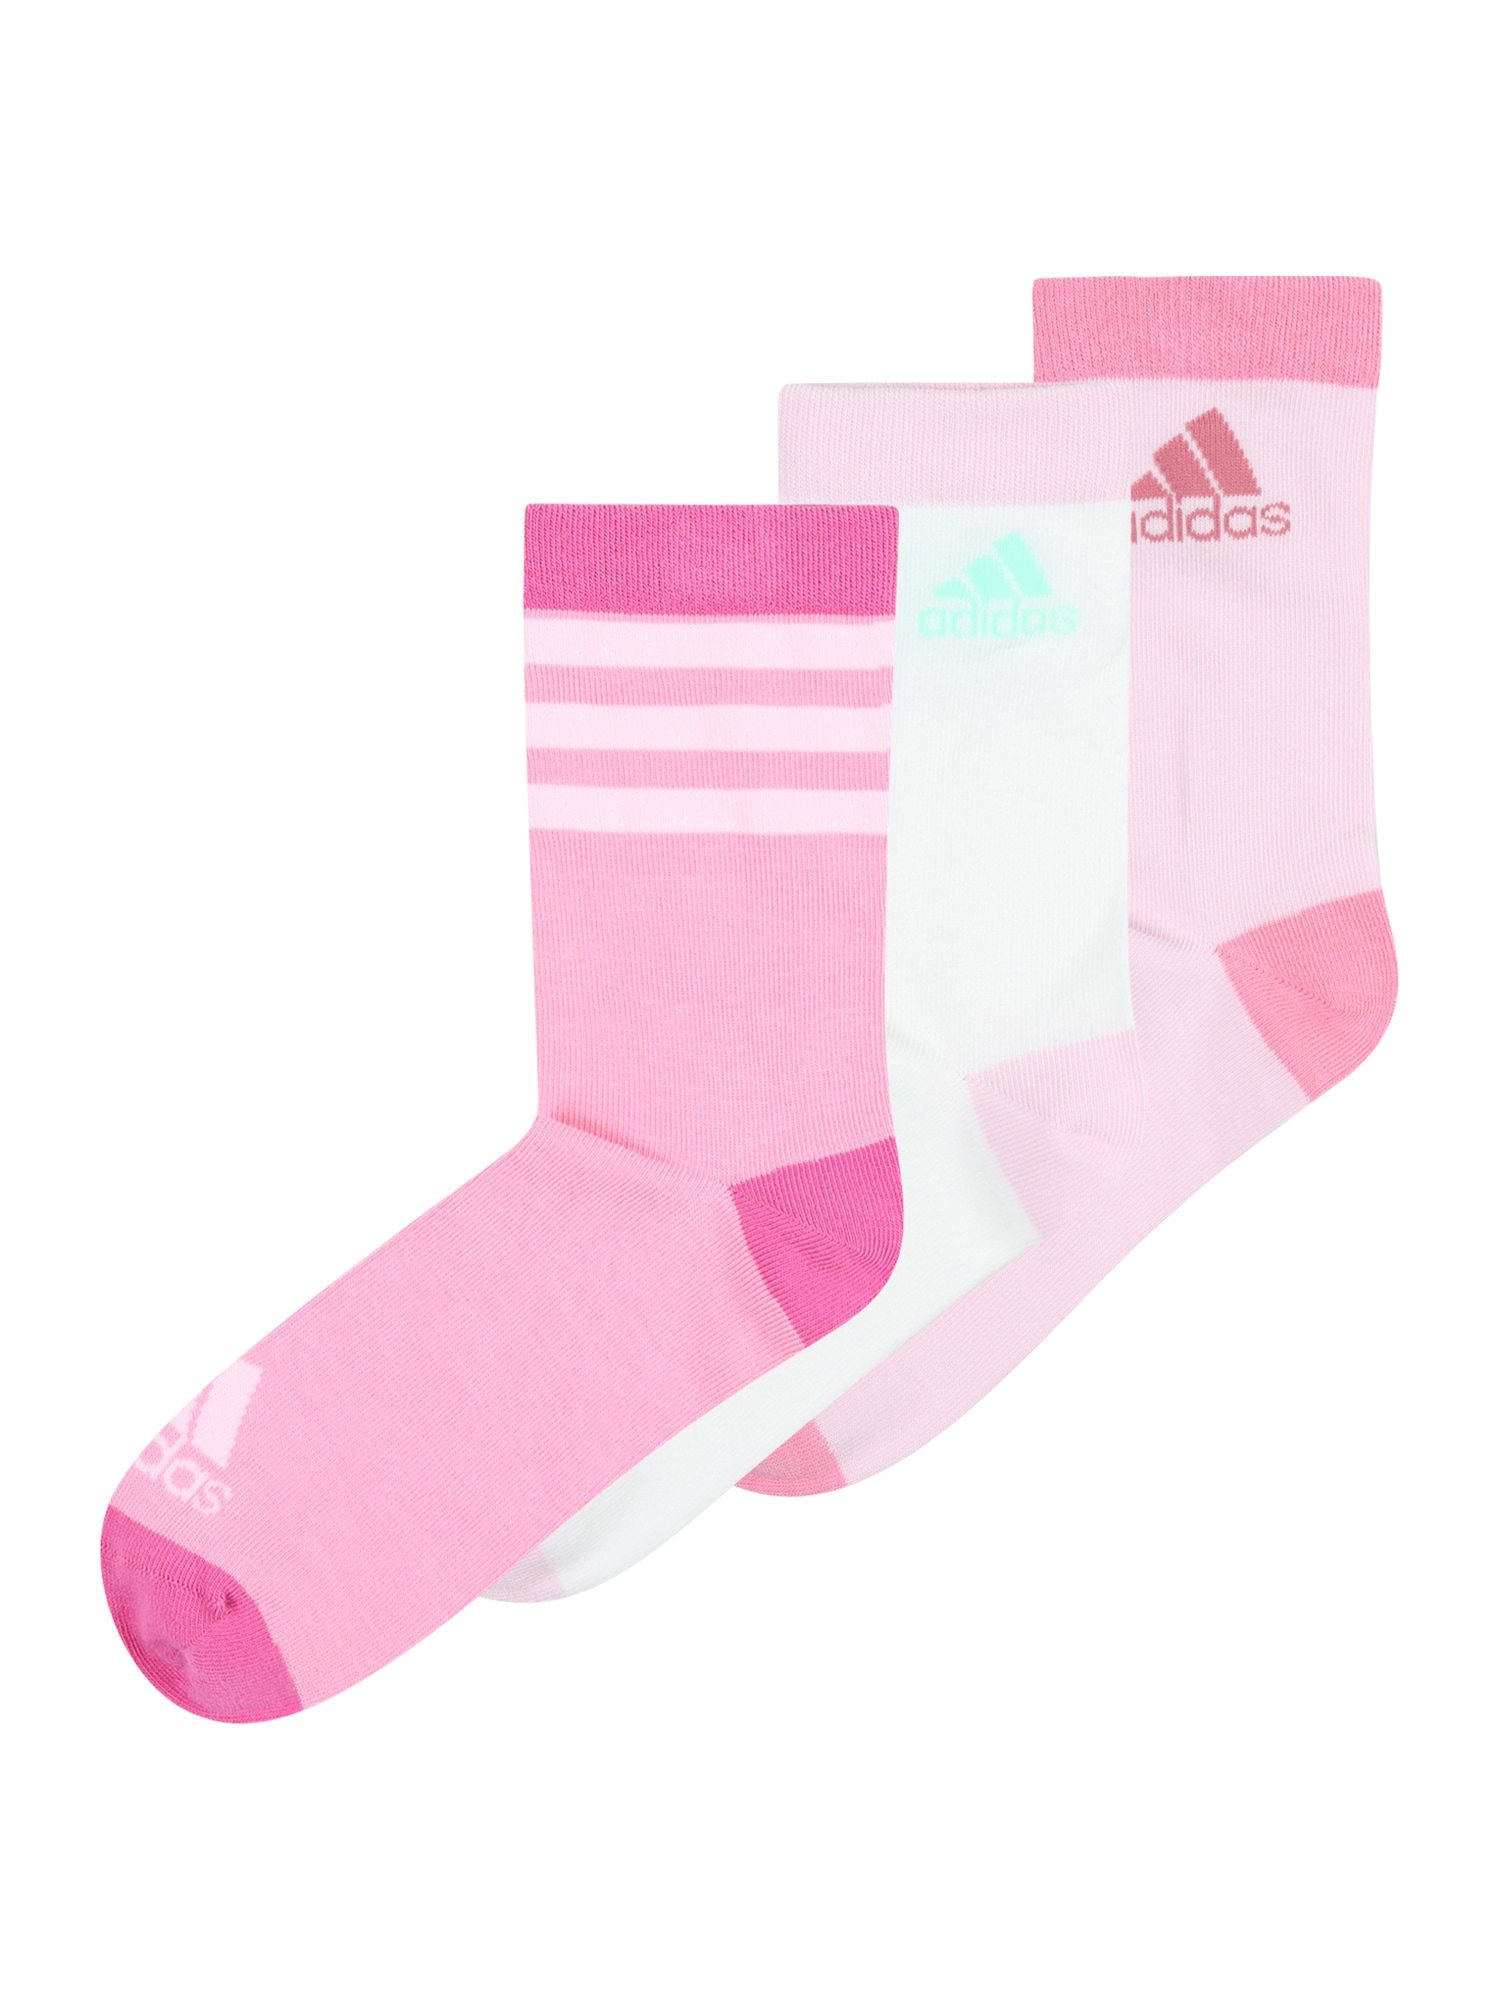 ADIDAS PERFORMANCE Športne nogavice  turkizna / roza / svetlo roza / bela